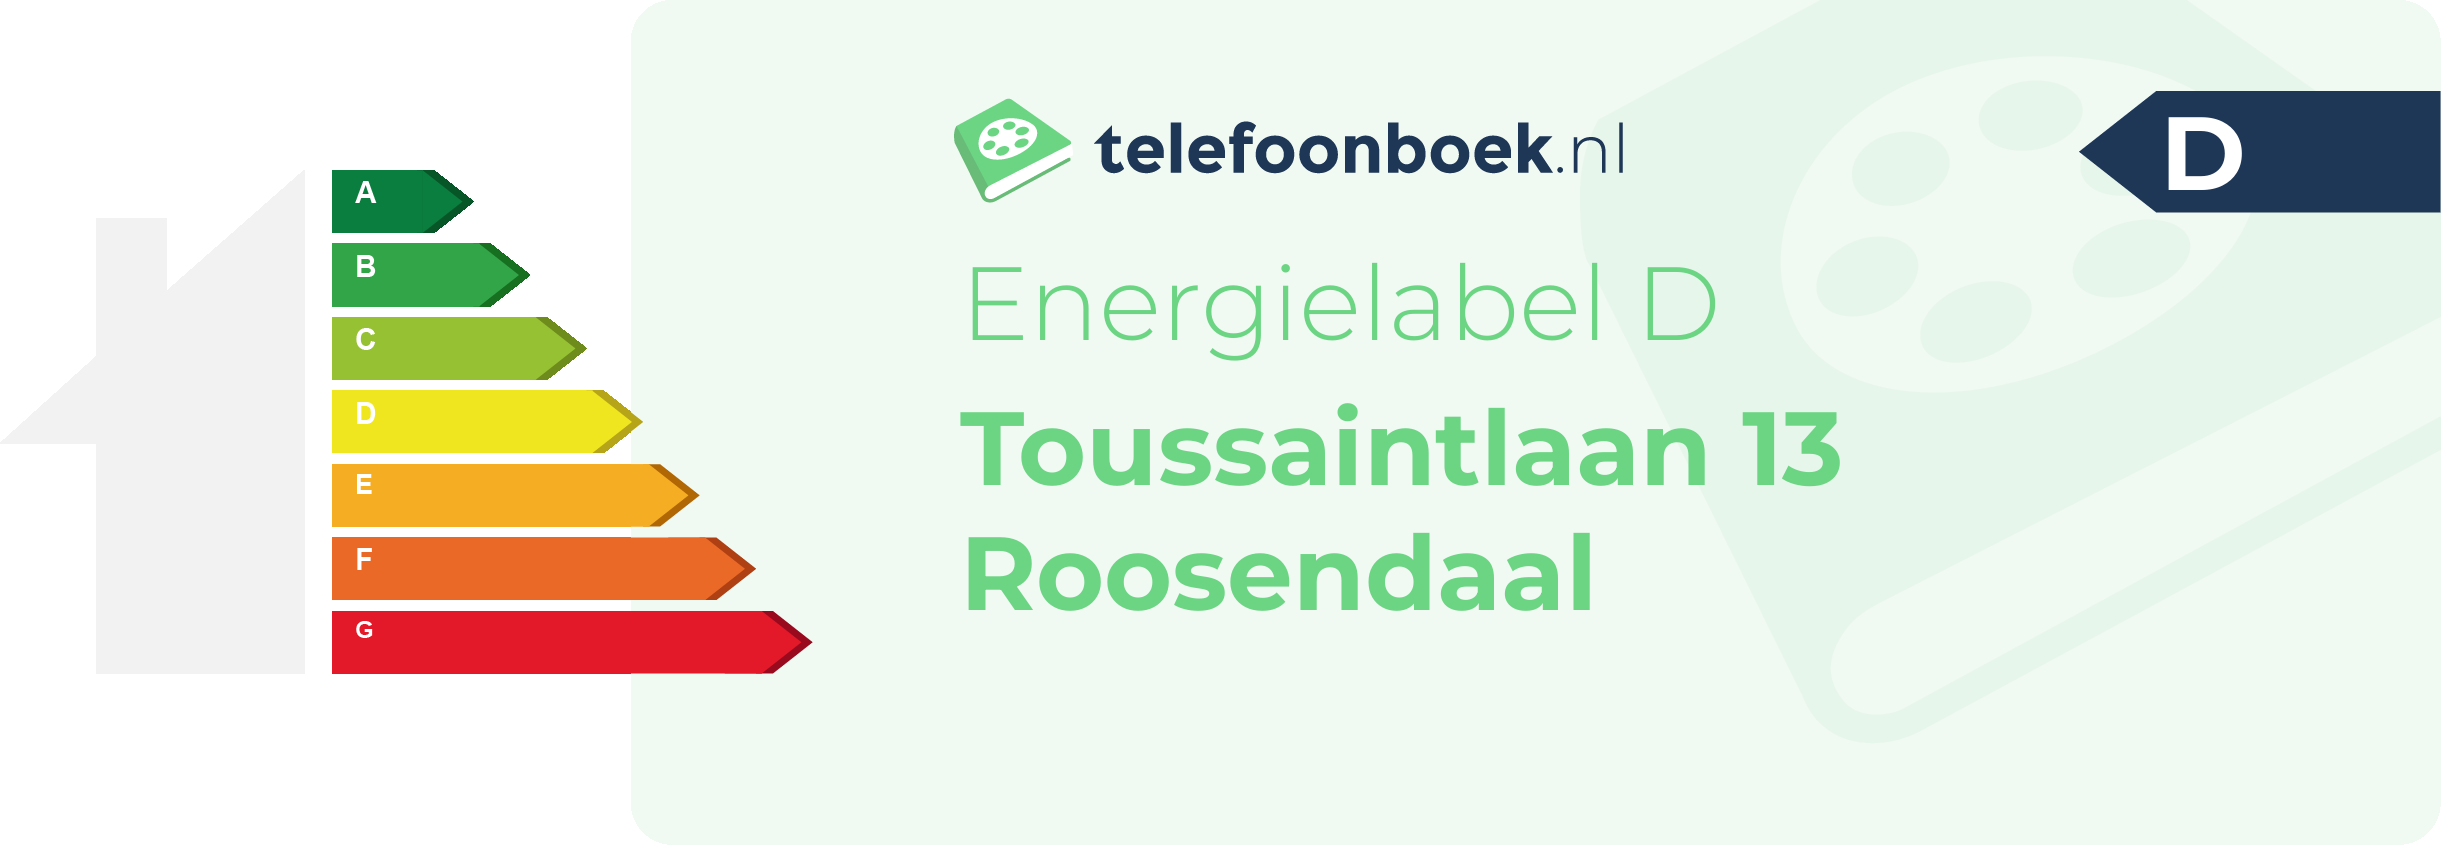 Energielabel Toussaintlaan 13 Roosendaal